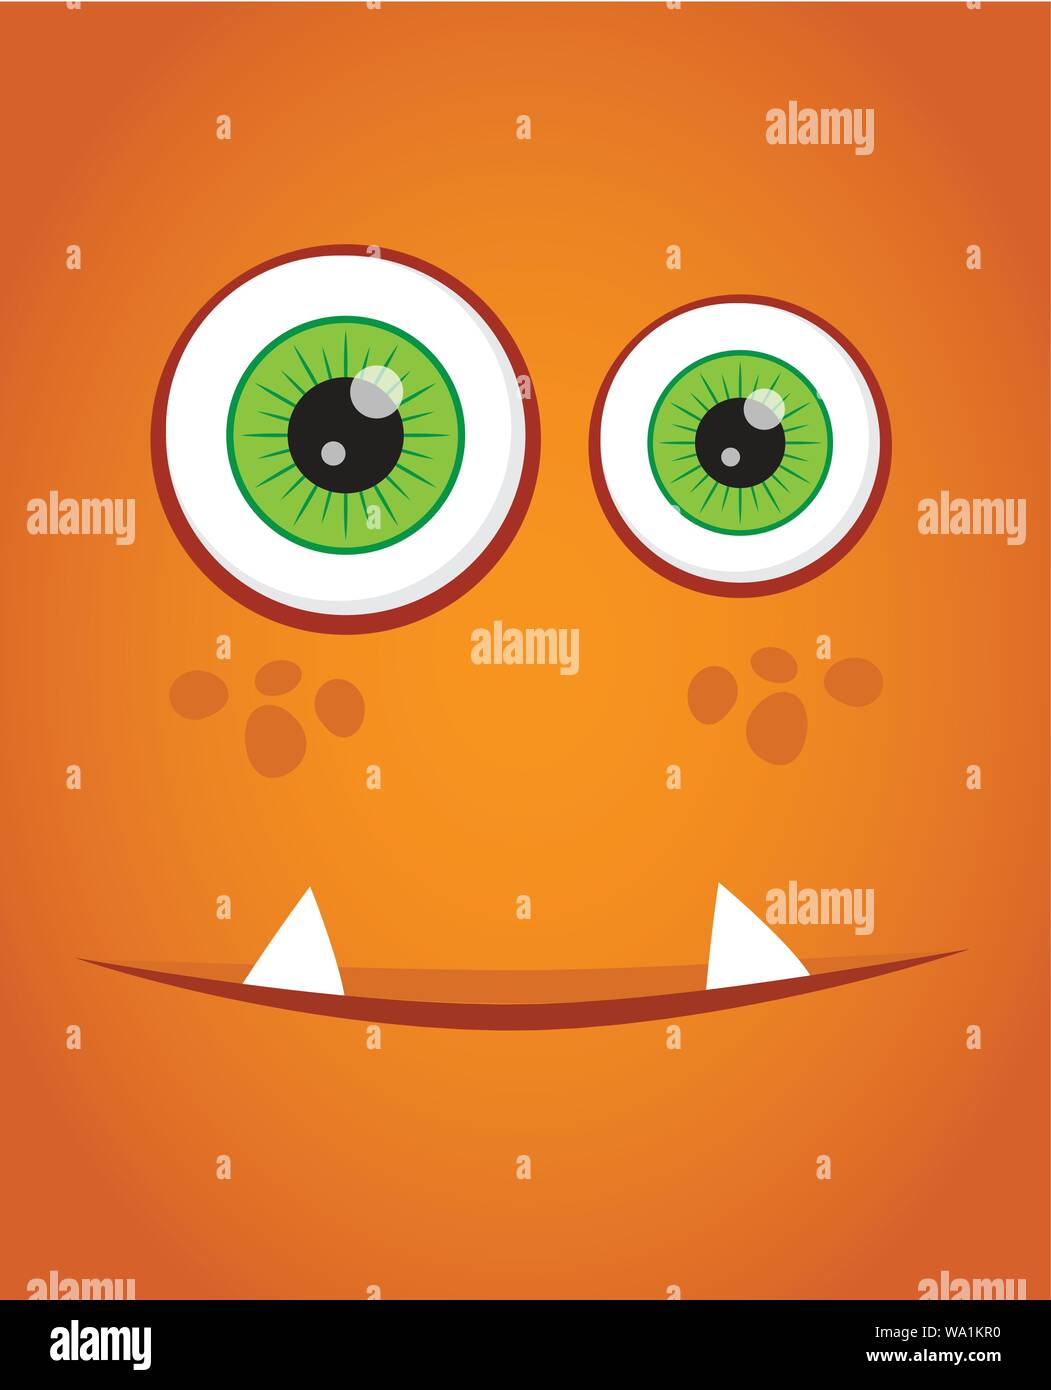 Fanny face monster background. Vector illustration Stock Vector